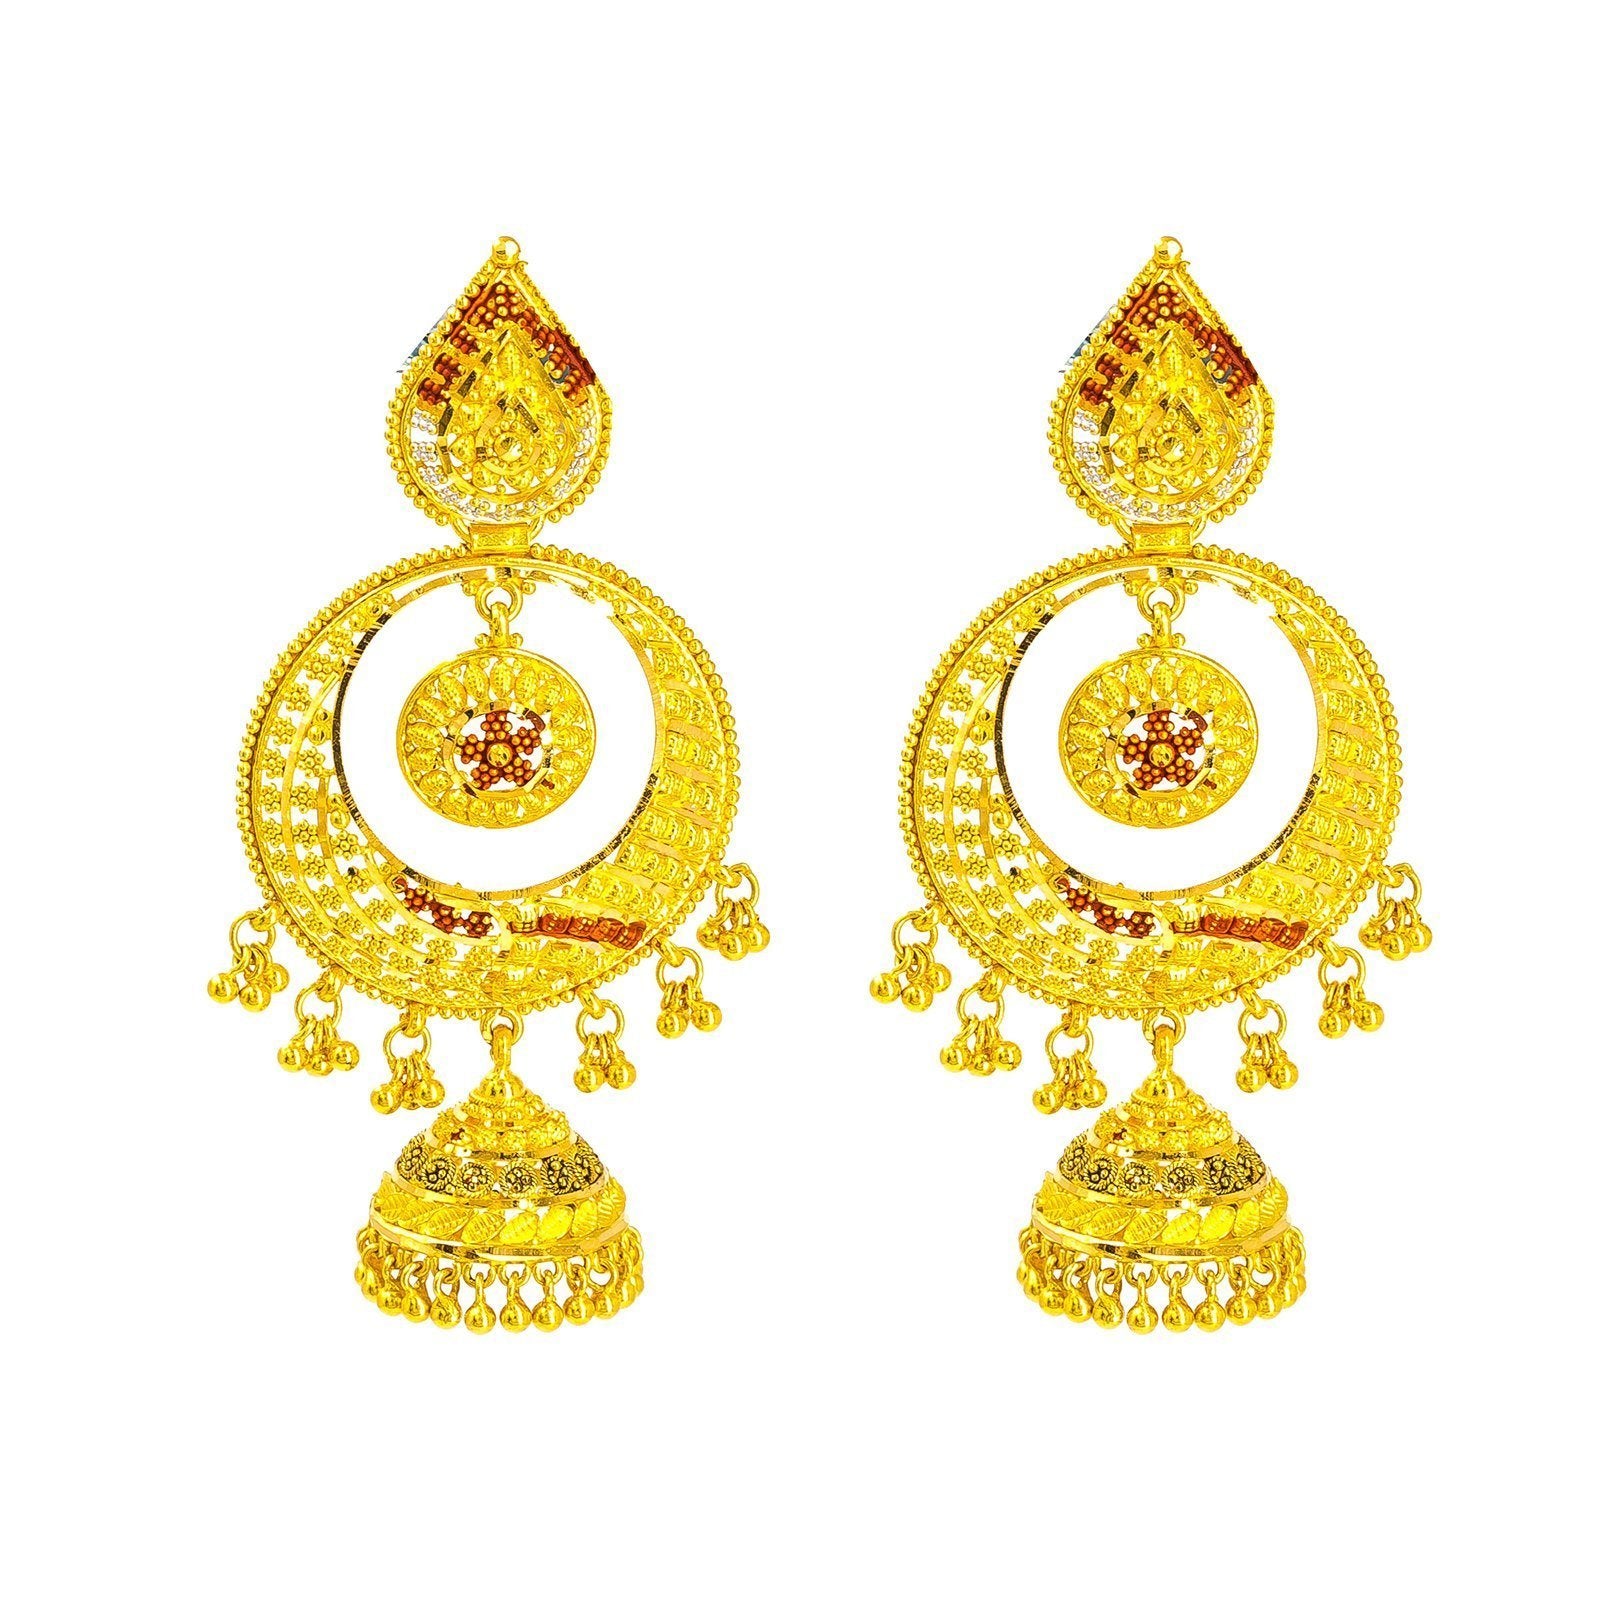 Indian Earrings Matt Gold Plated Bridal Party Real Finish Kasu CZ AD  Chandbali | eBay